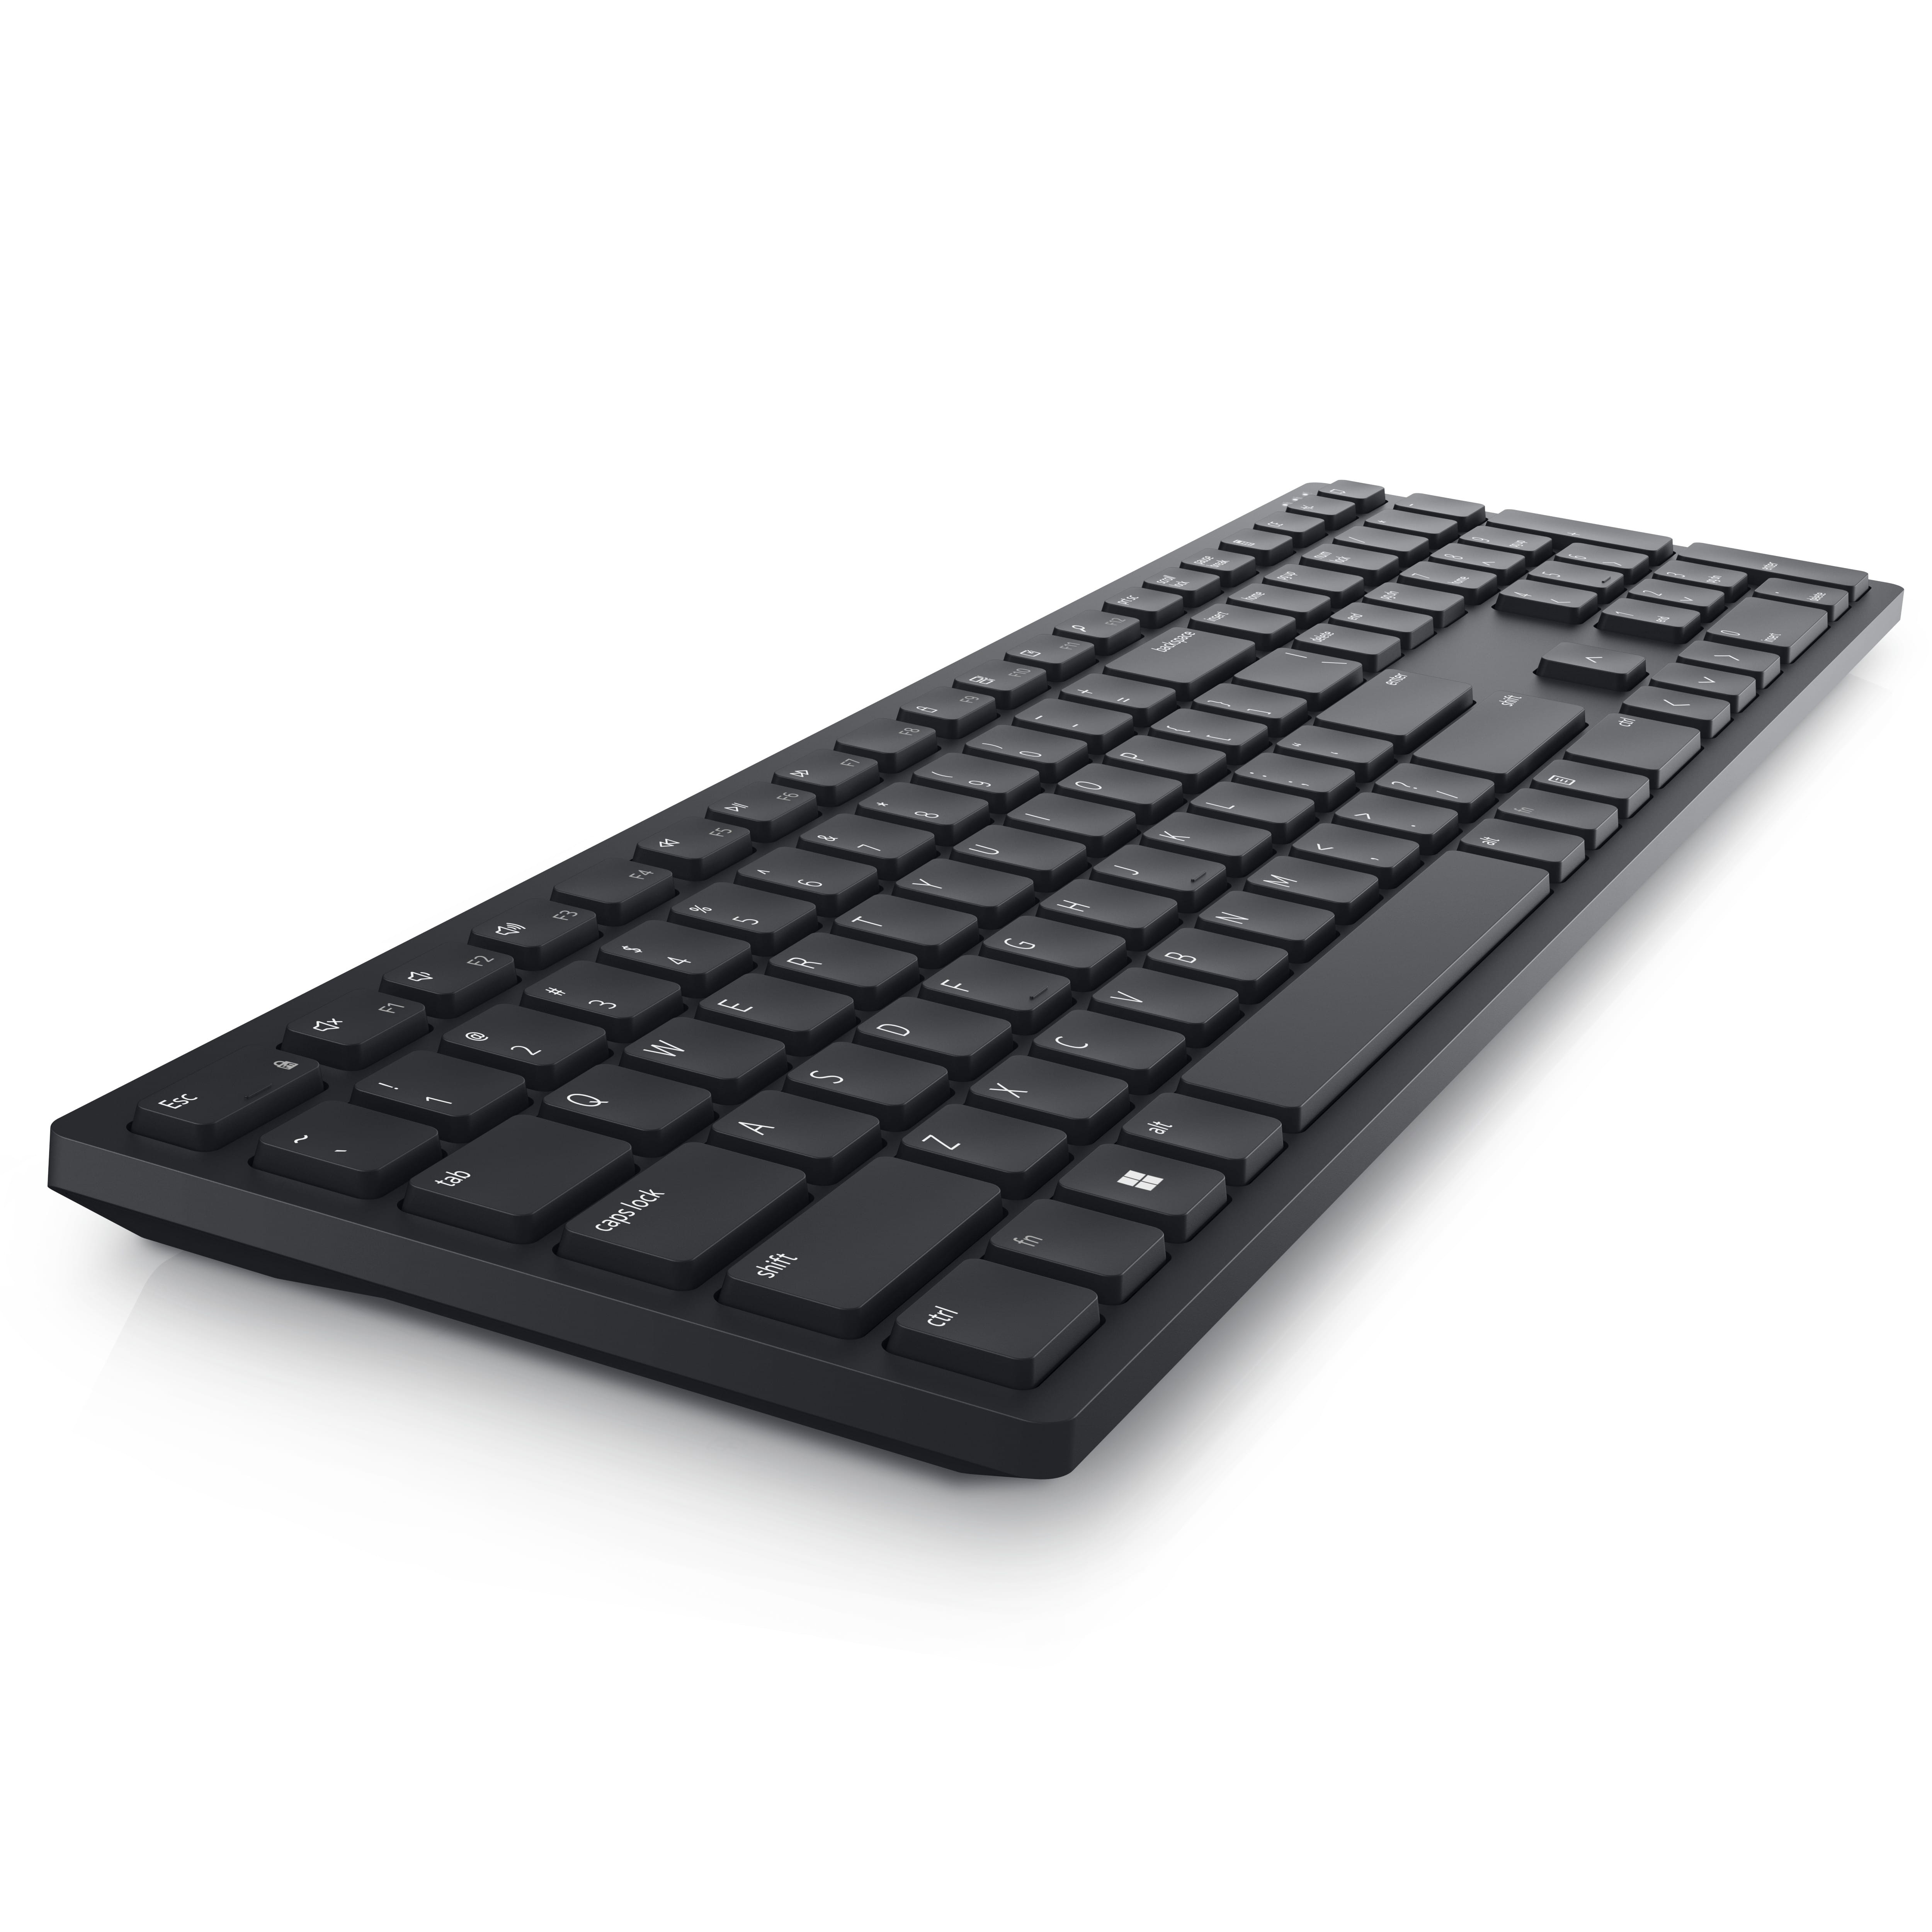 Dell KB500 - Tastatur - kabellos - 2.4 GHz - QWERTY